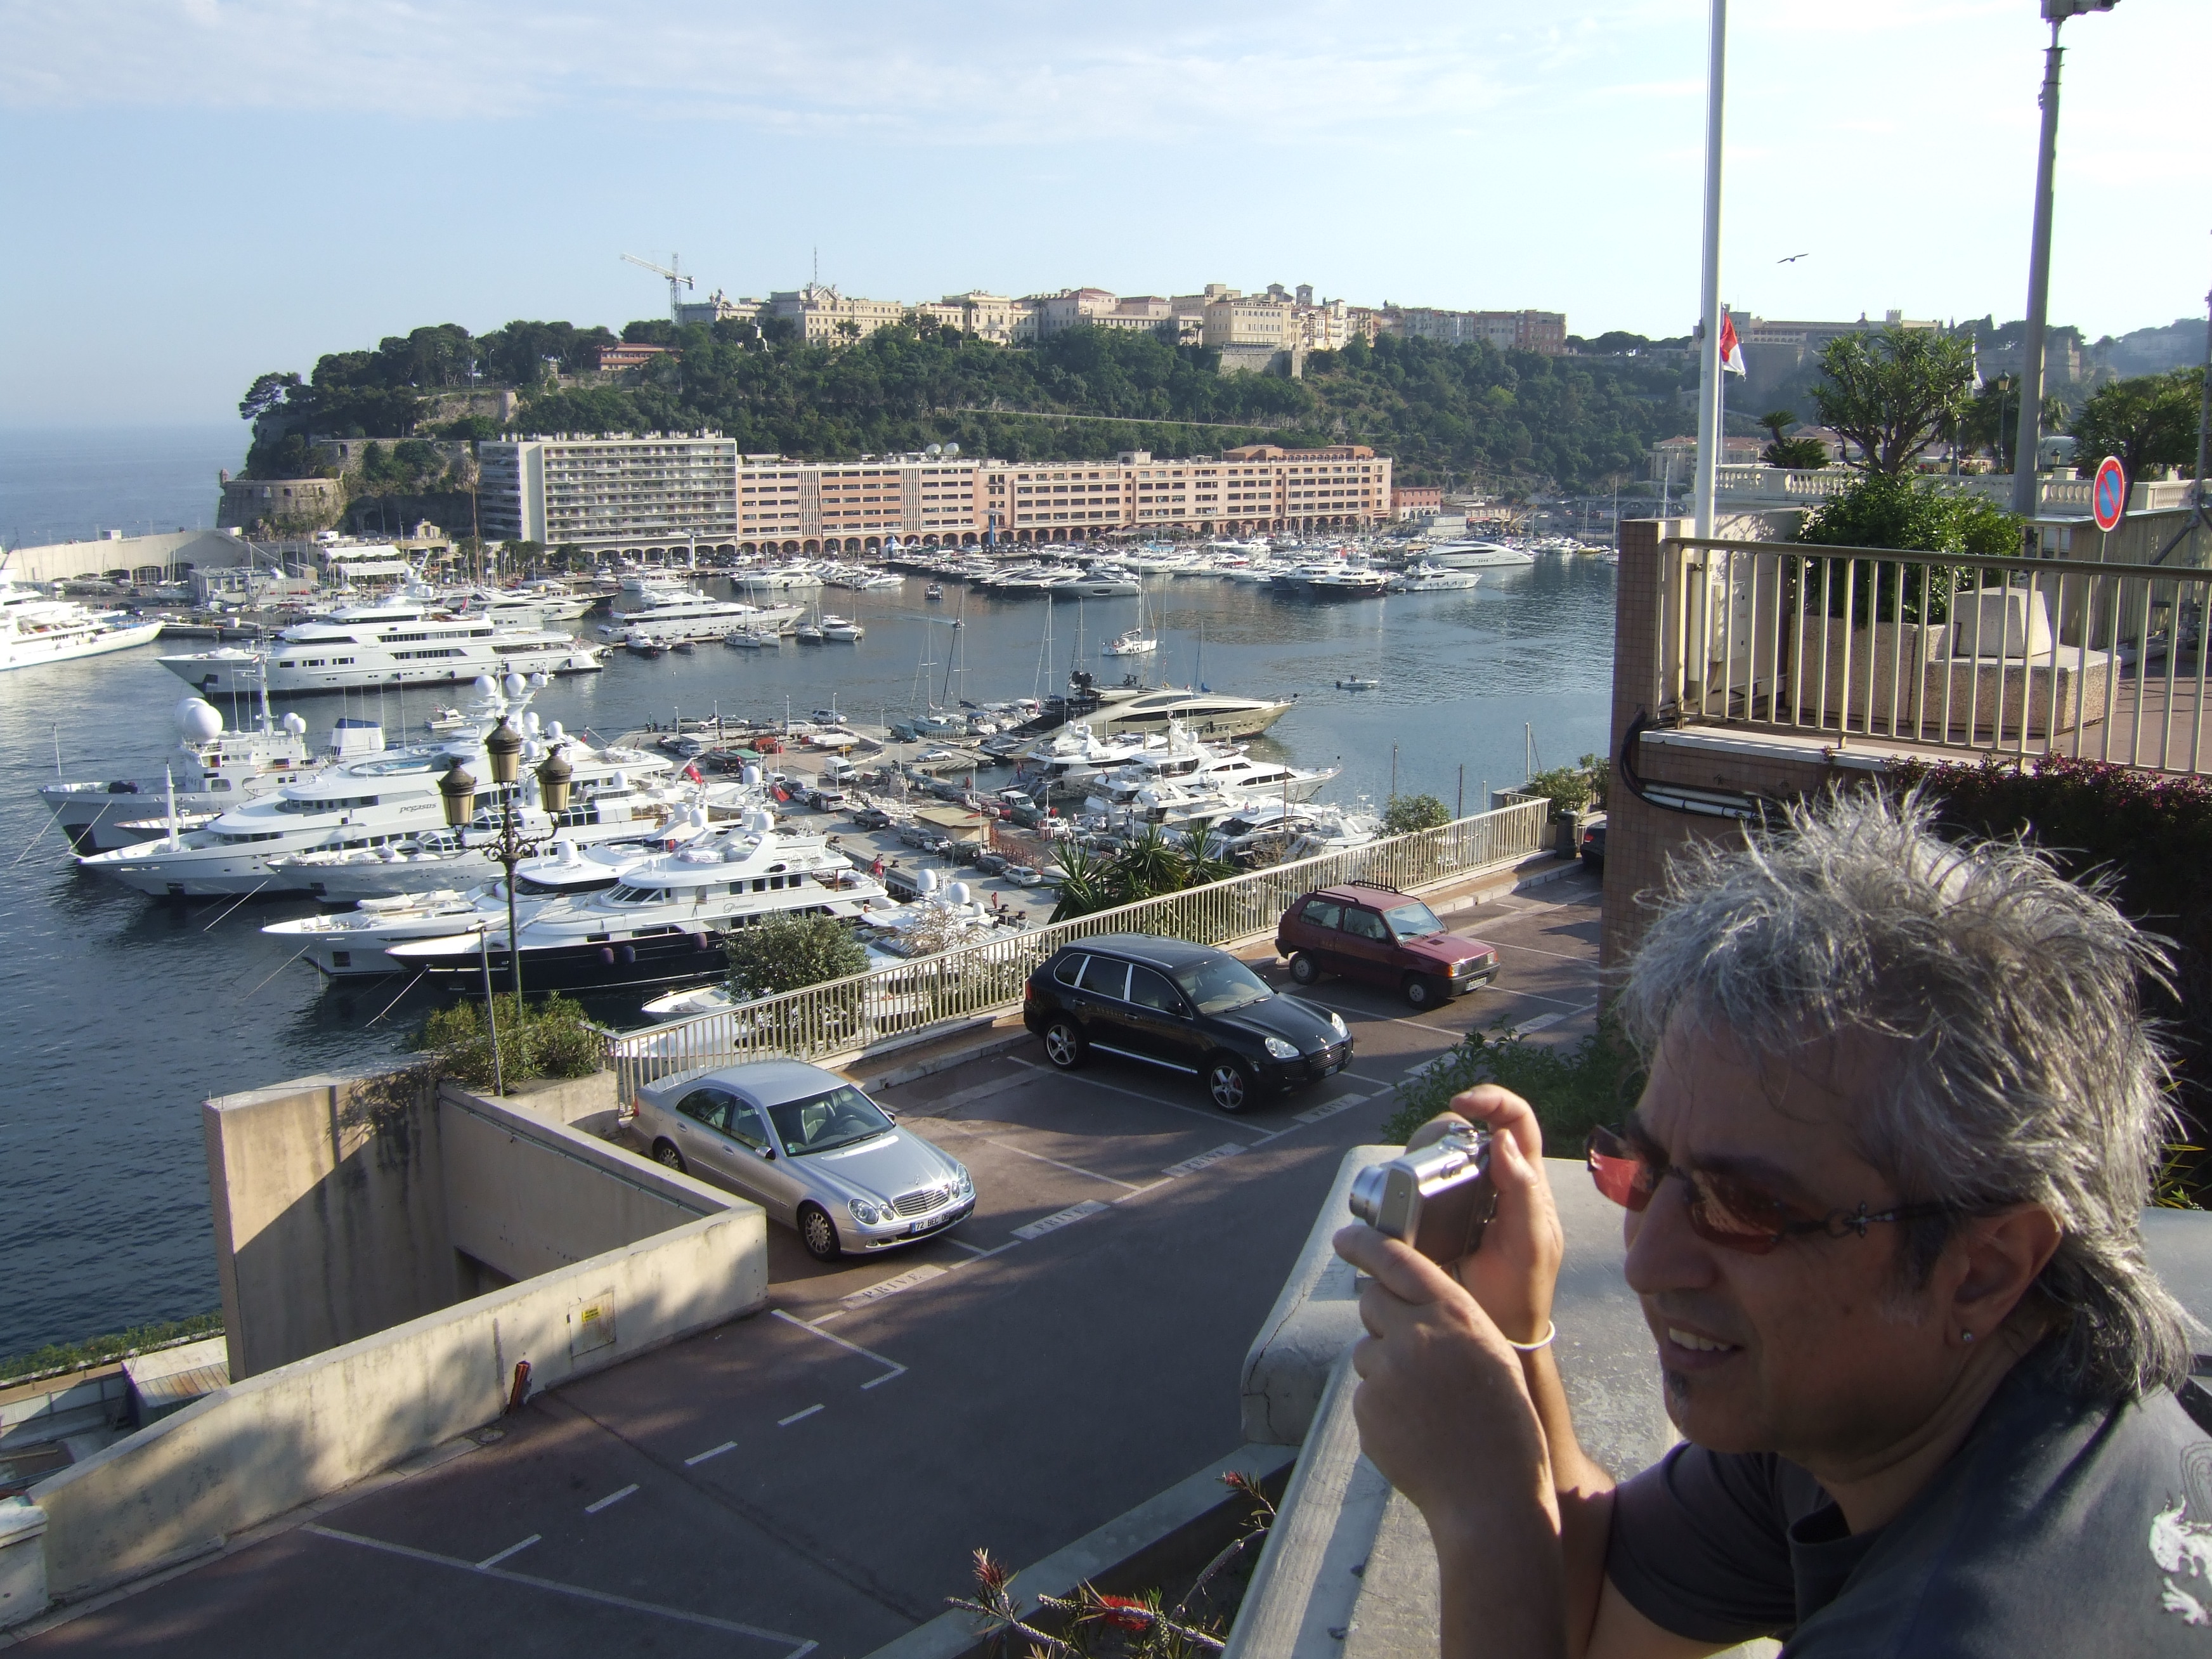 Boris Acosta photographing in Monaco, Europe.